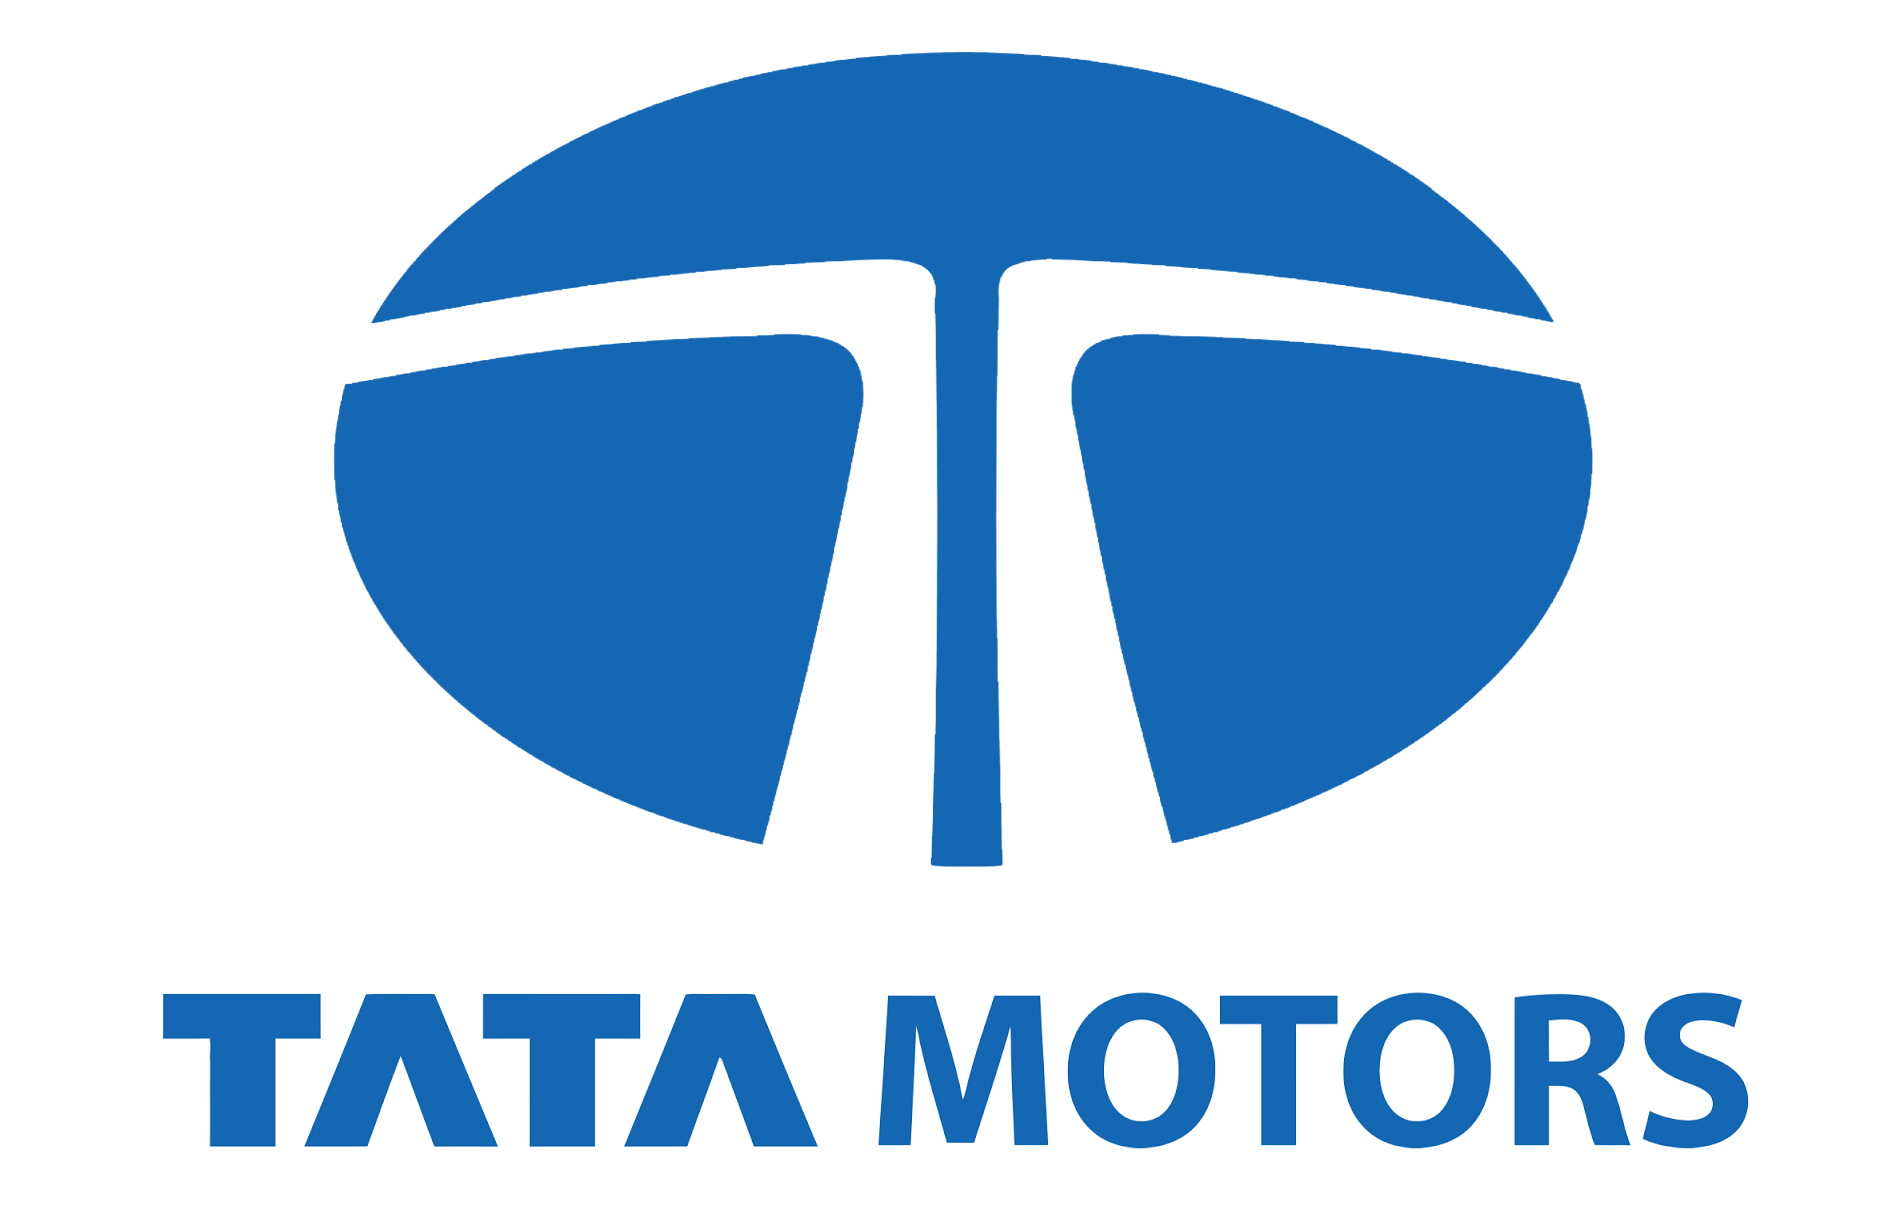 Tata Motors Cars Showroom - Rising Auto Wheels|Show Room|Automotive